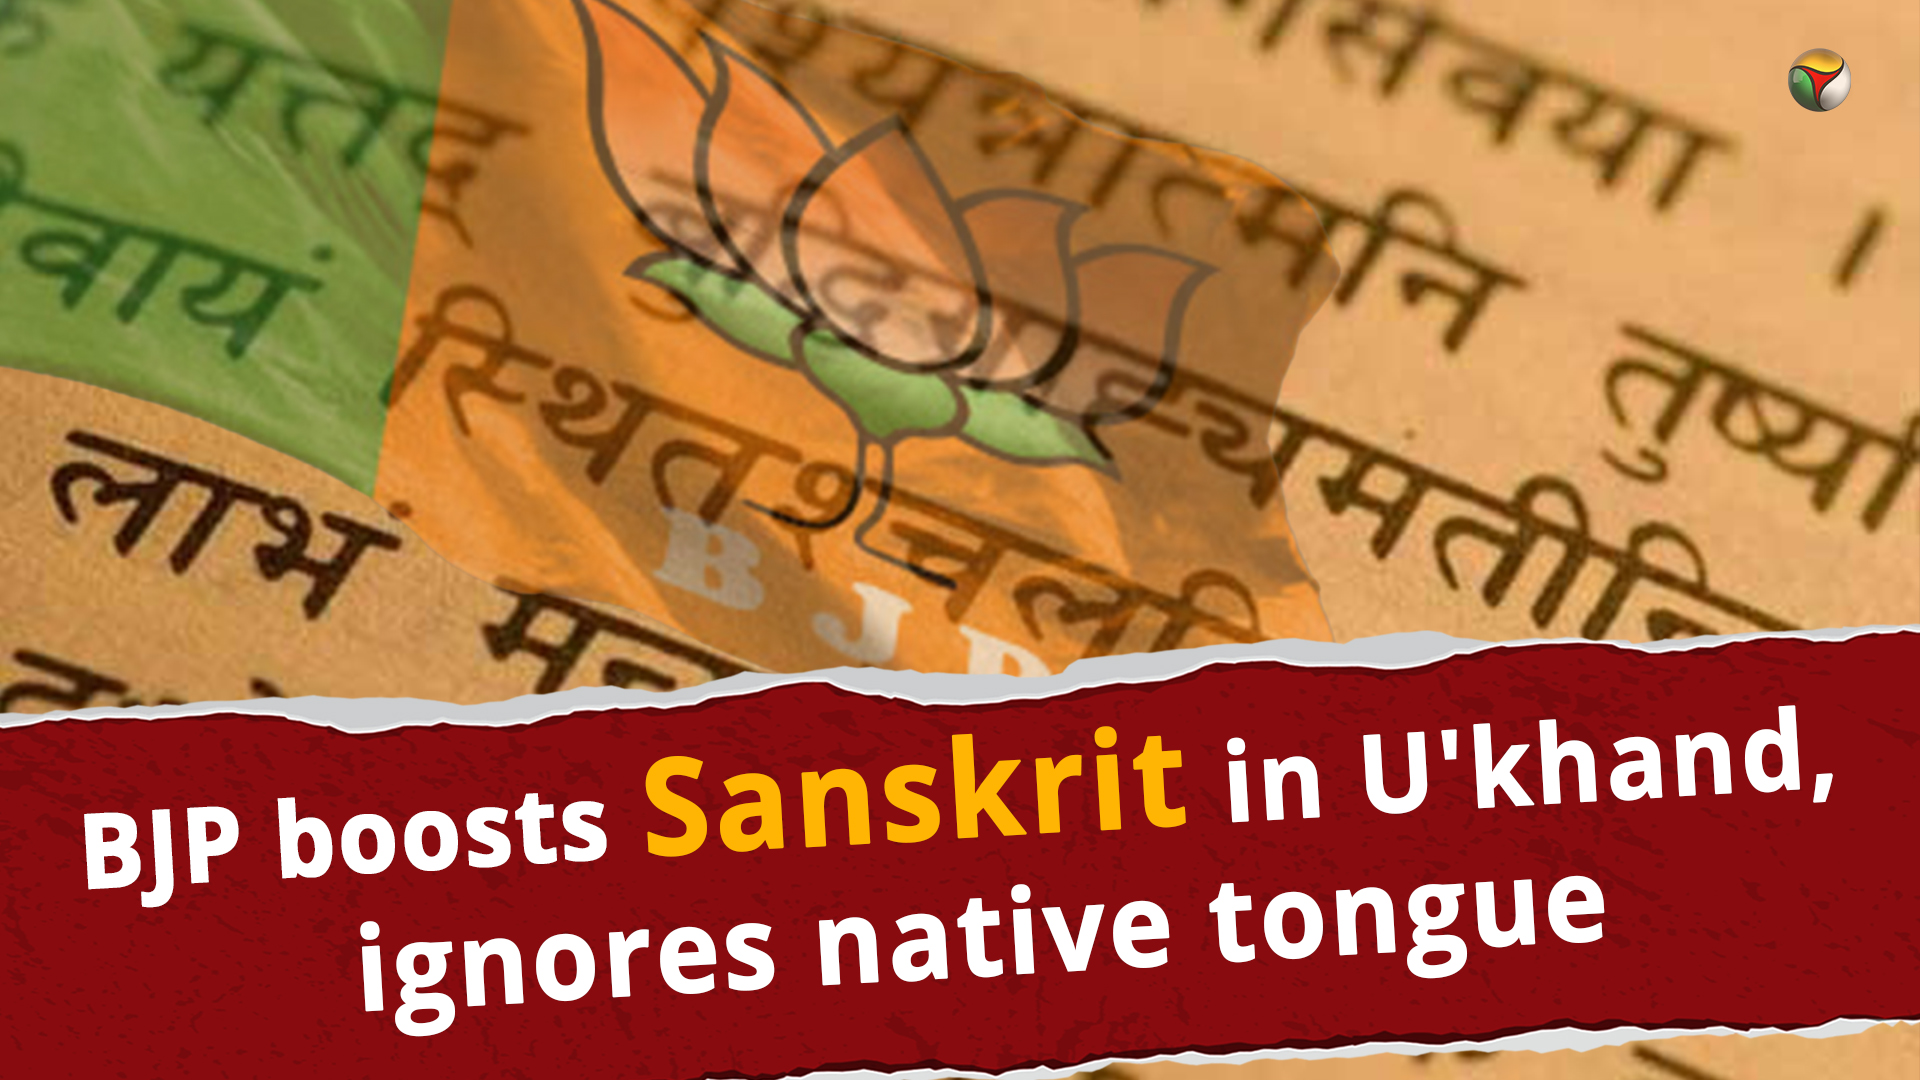 BJP boosts Sanskrit in Uttarakhand, ignores native Kumaoni, Garhwali